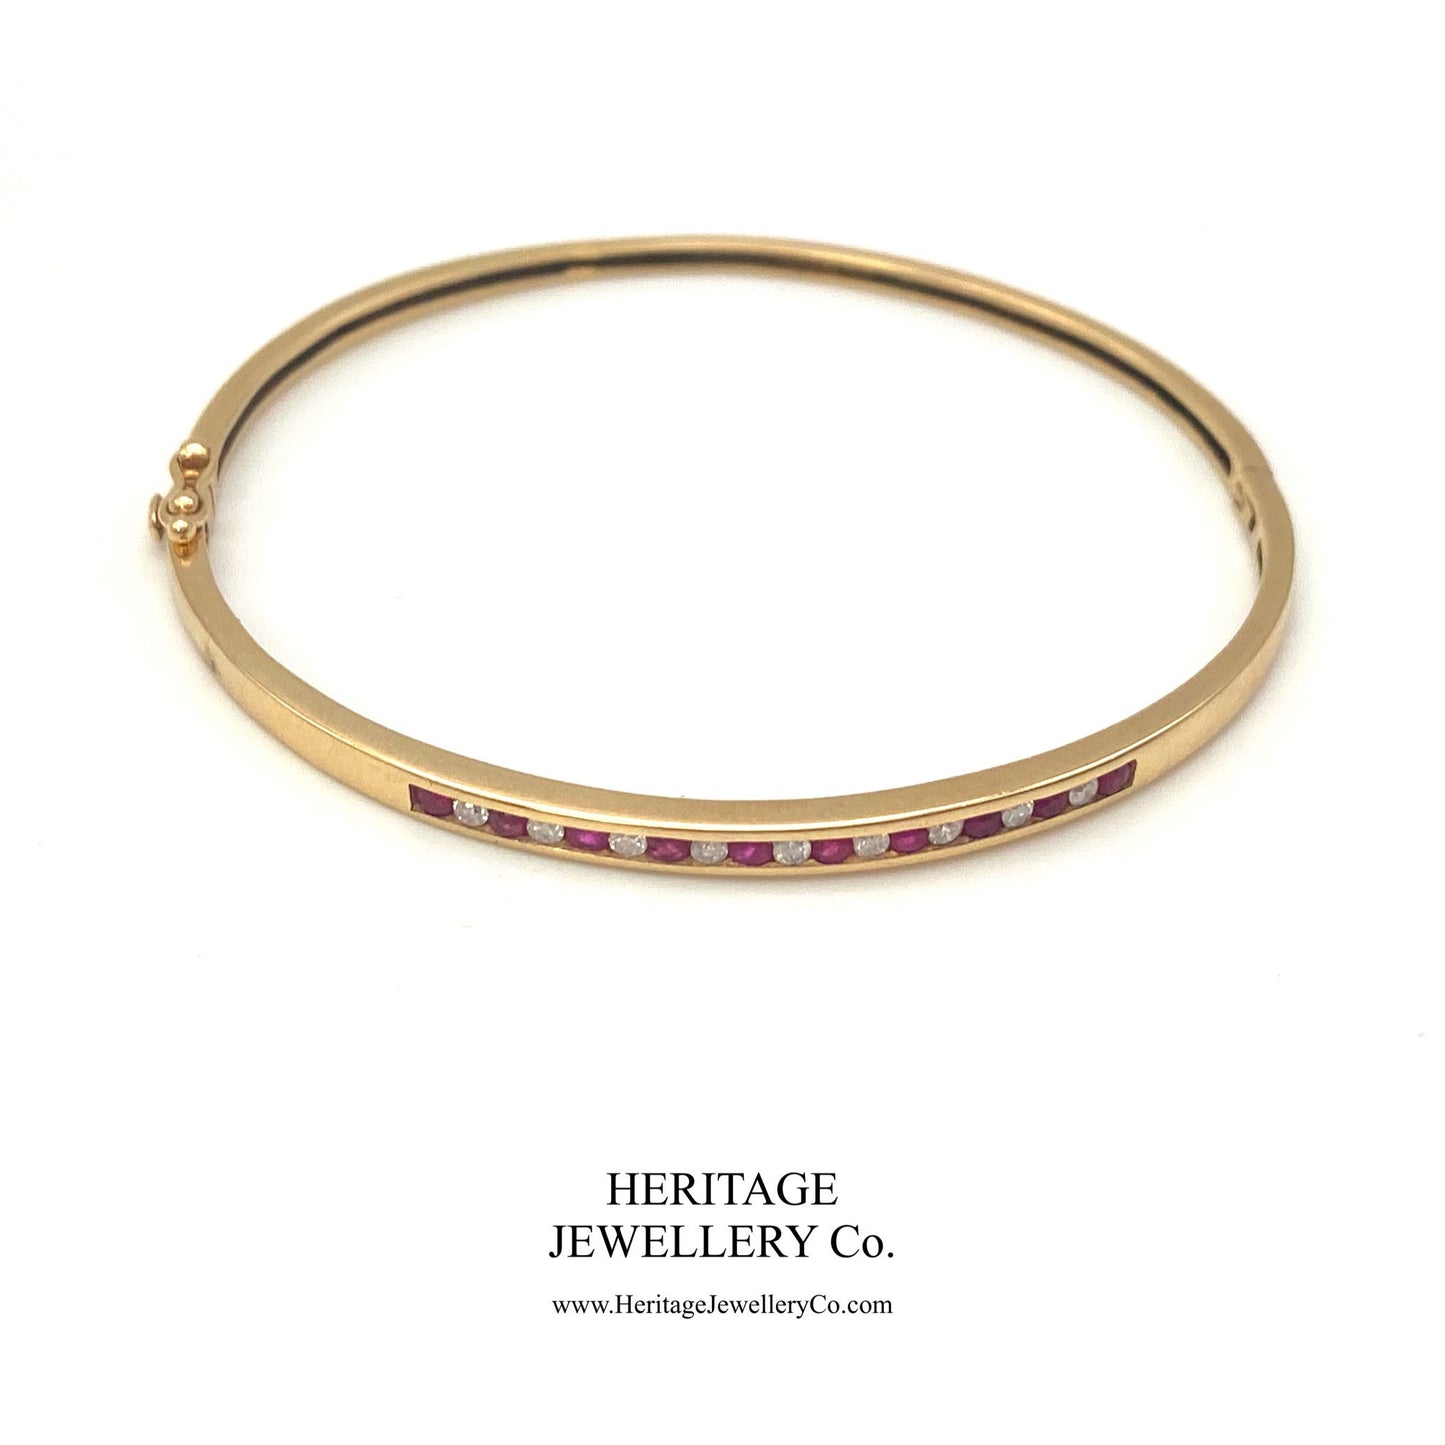 Vintage Gold Bangle Bracelet set with Ruby and Diamond